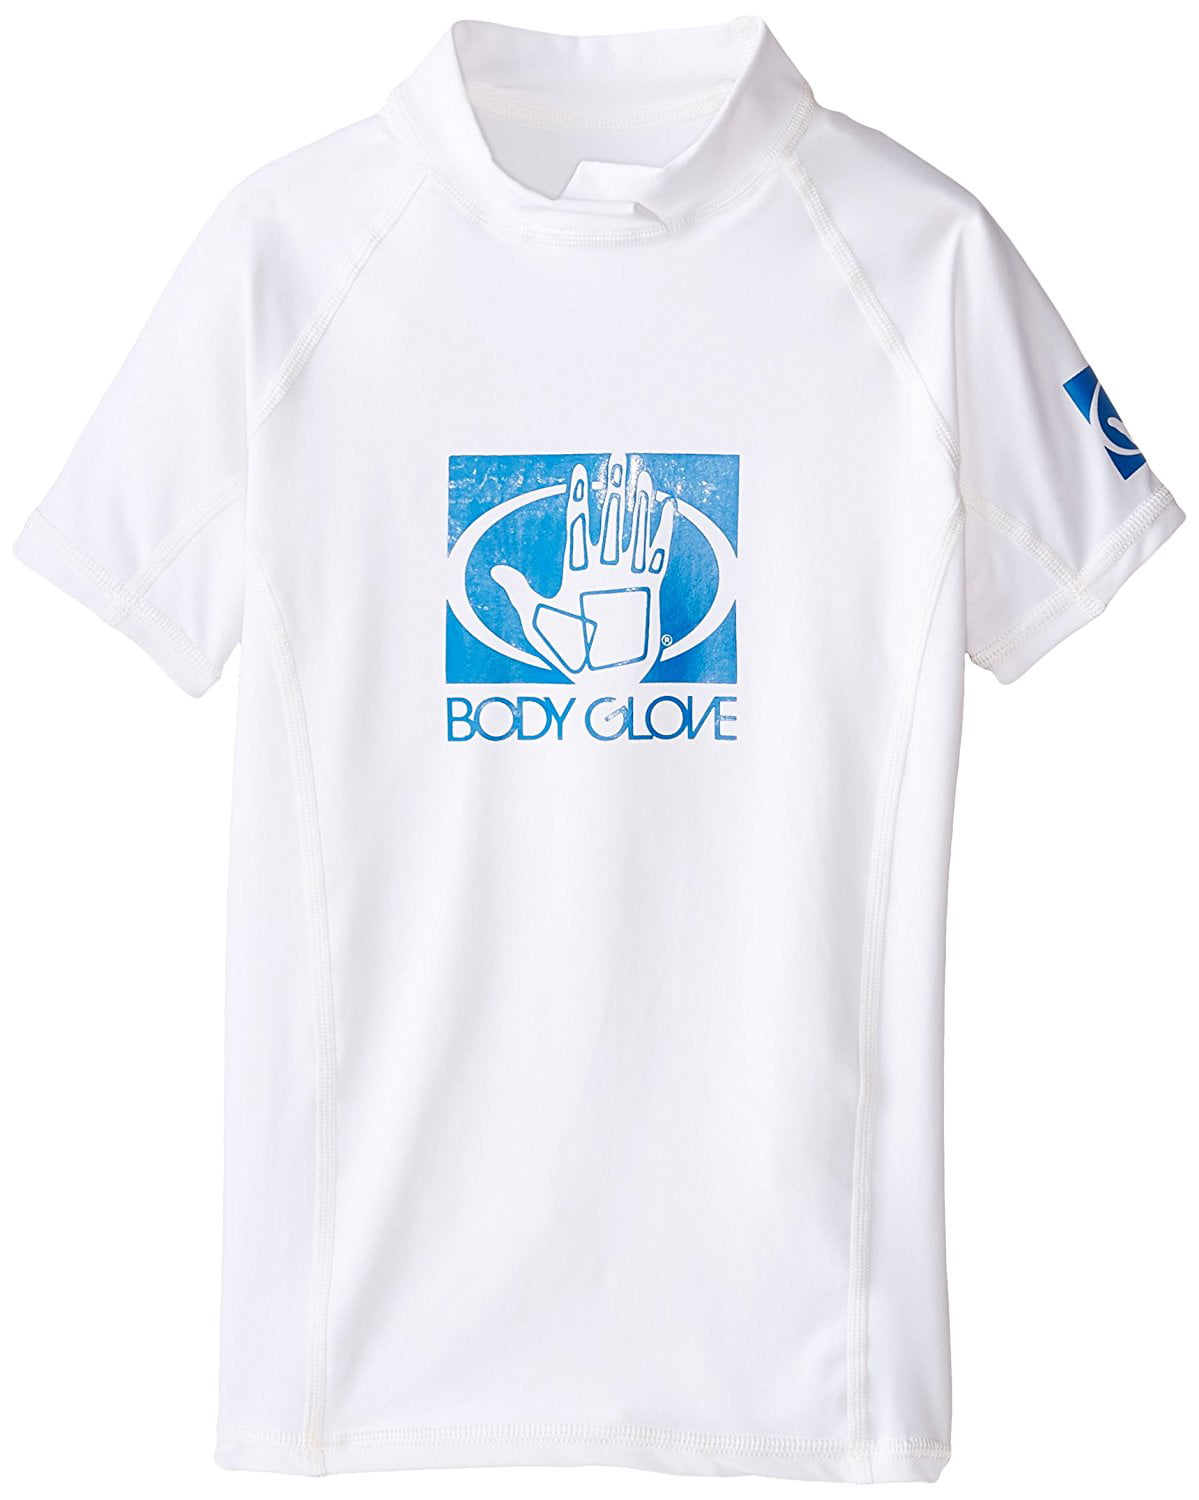 Body Glove Mens Performance Short Arm Rashguard X-Large White/Silver